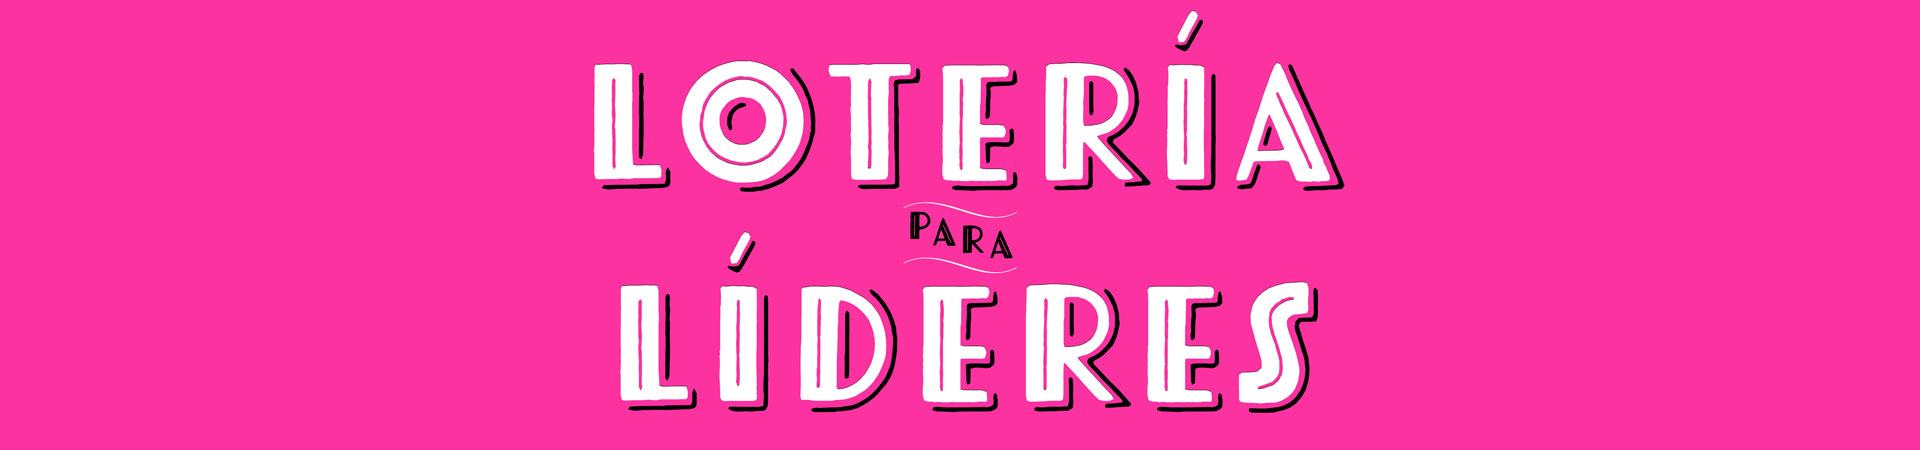 Pink header that says Loteria par Lideres